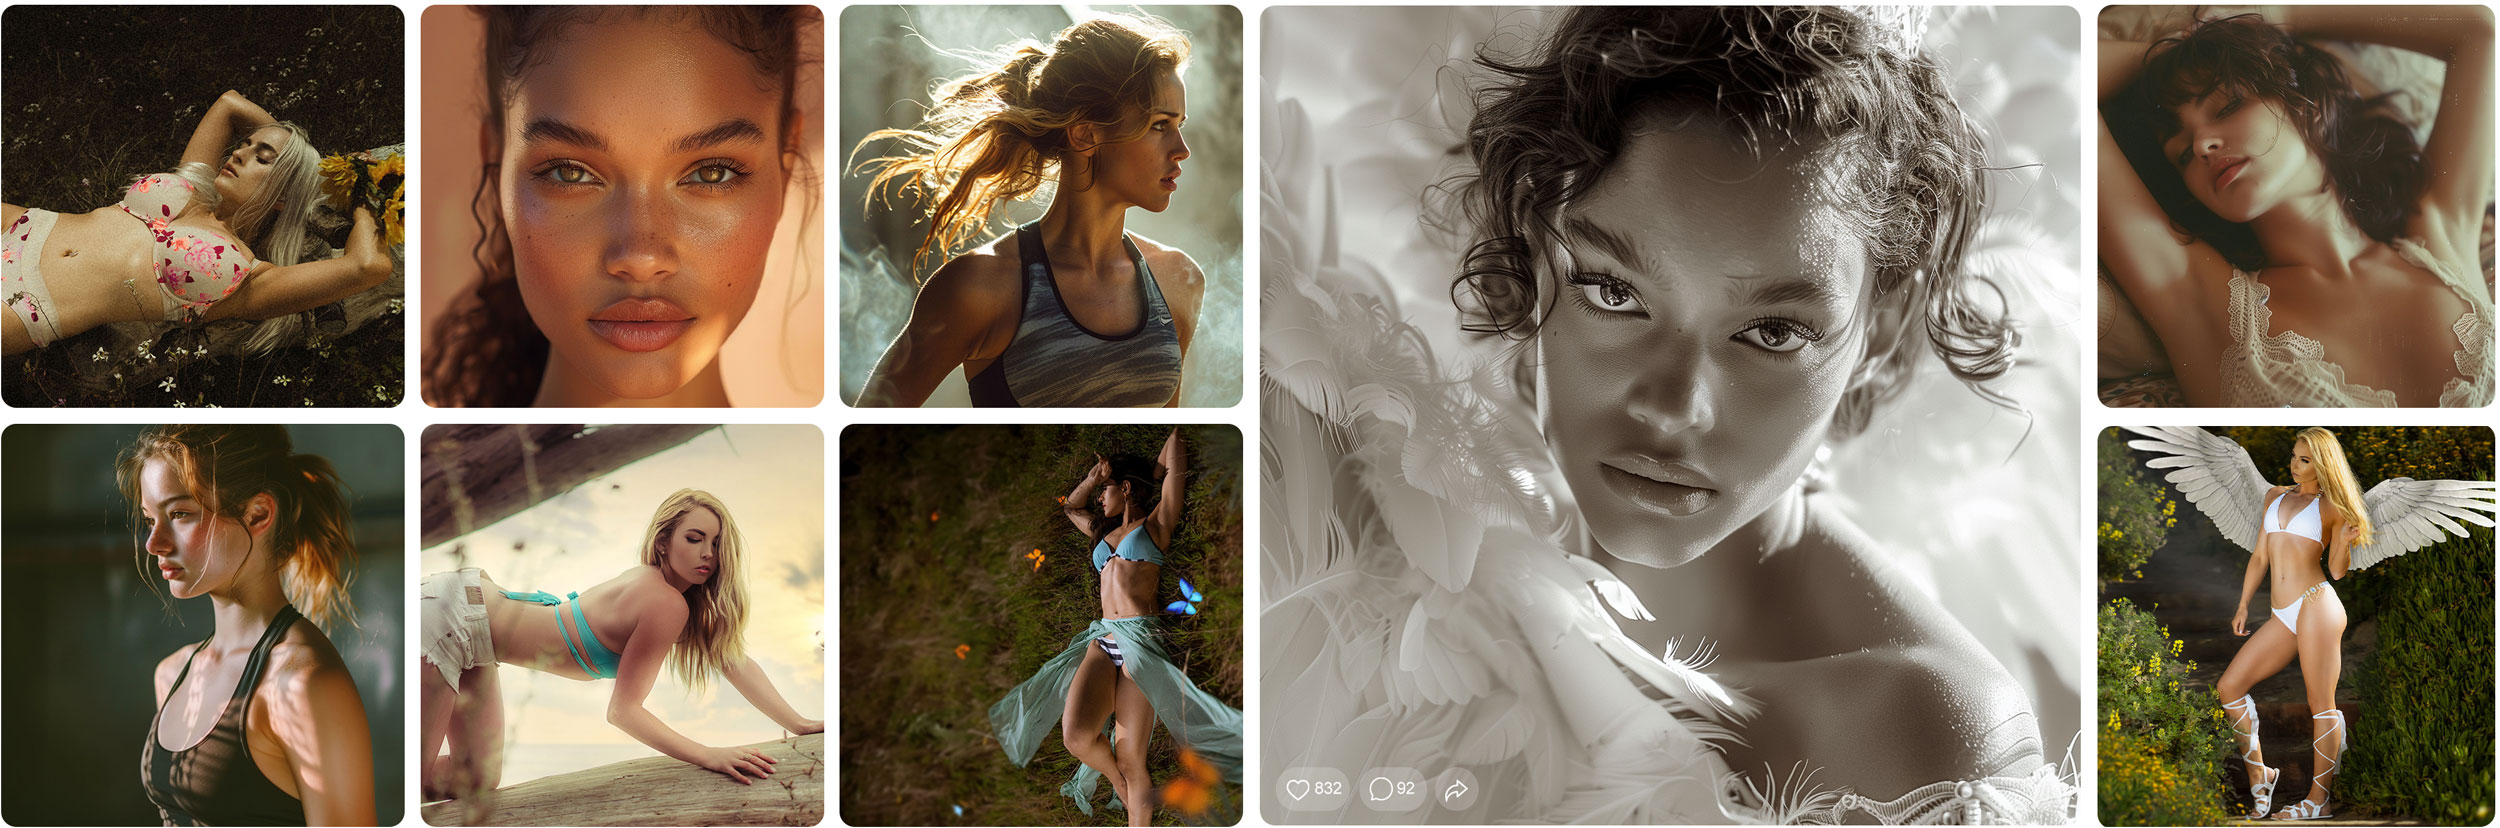 Hyprr Social Media Profile - Andy H. Tu Photography Portfolio of beautiful women